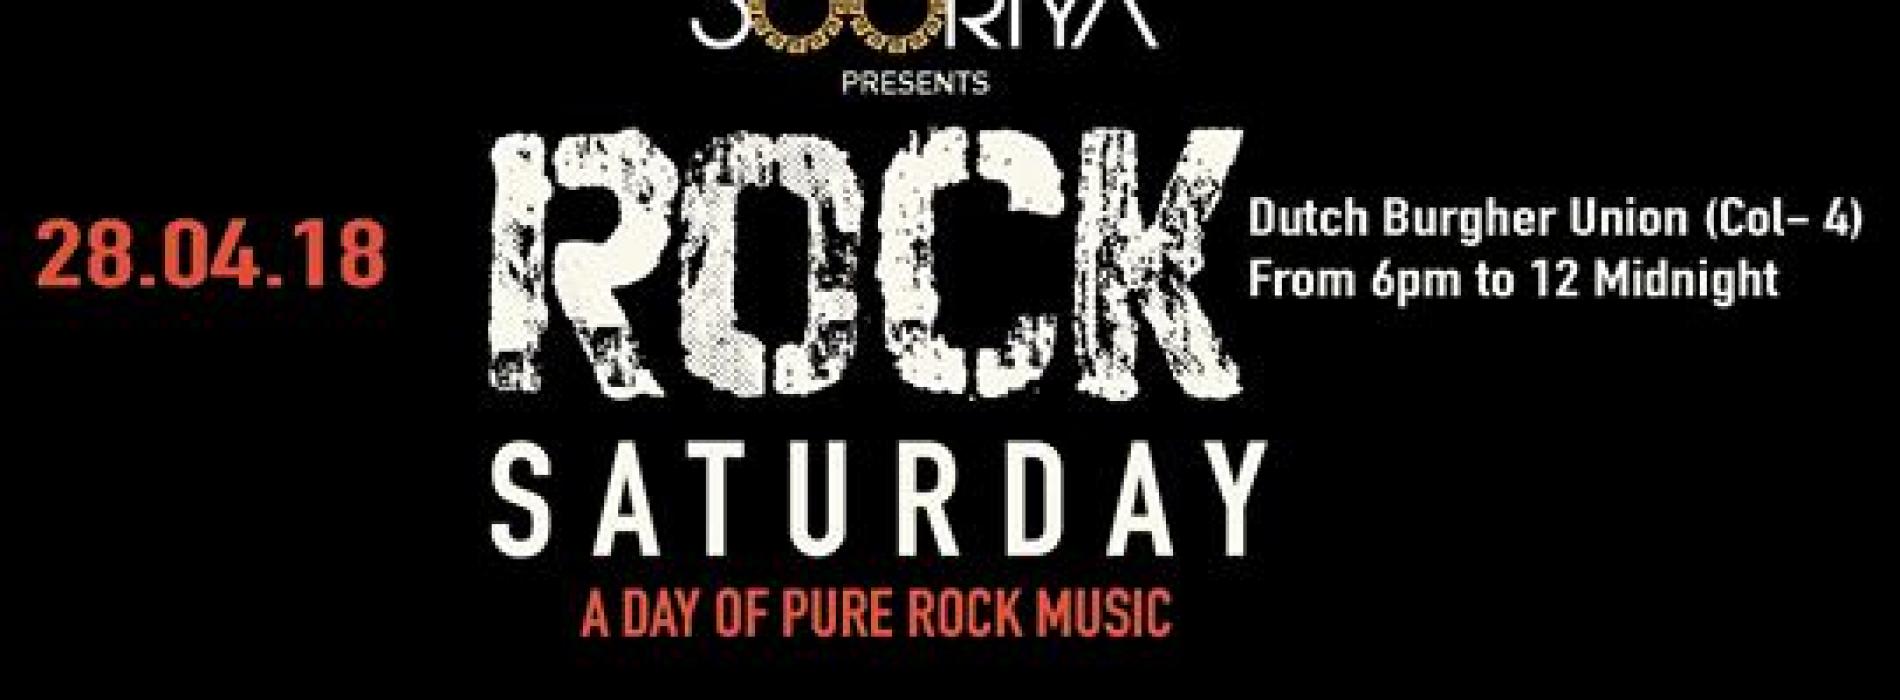 Rock Saturday Is On This Weekend!